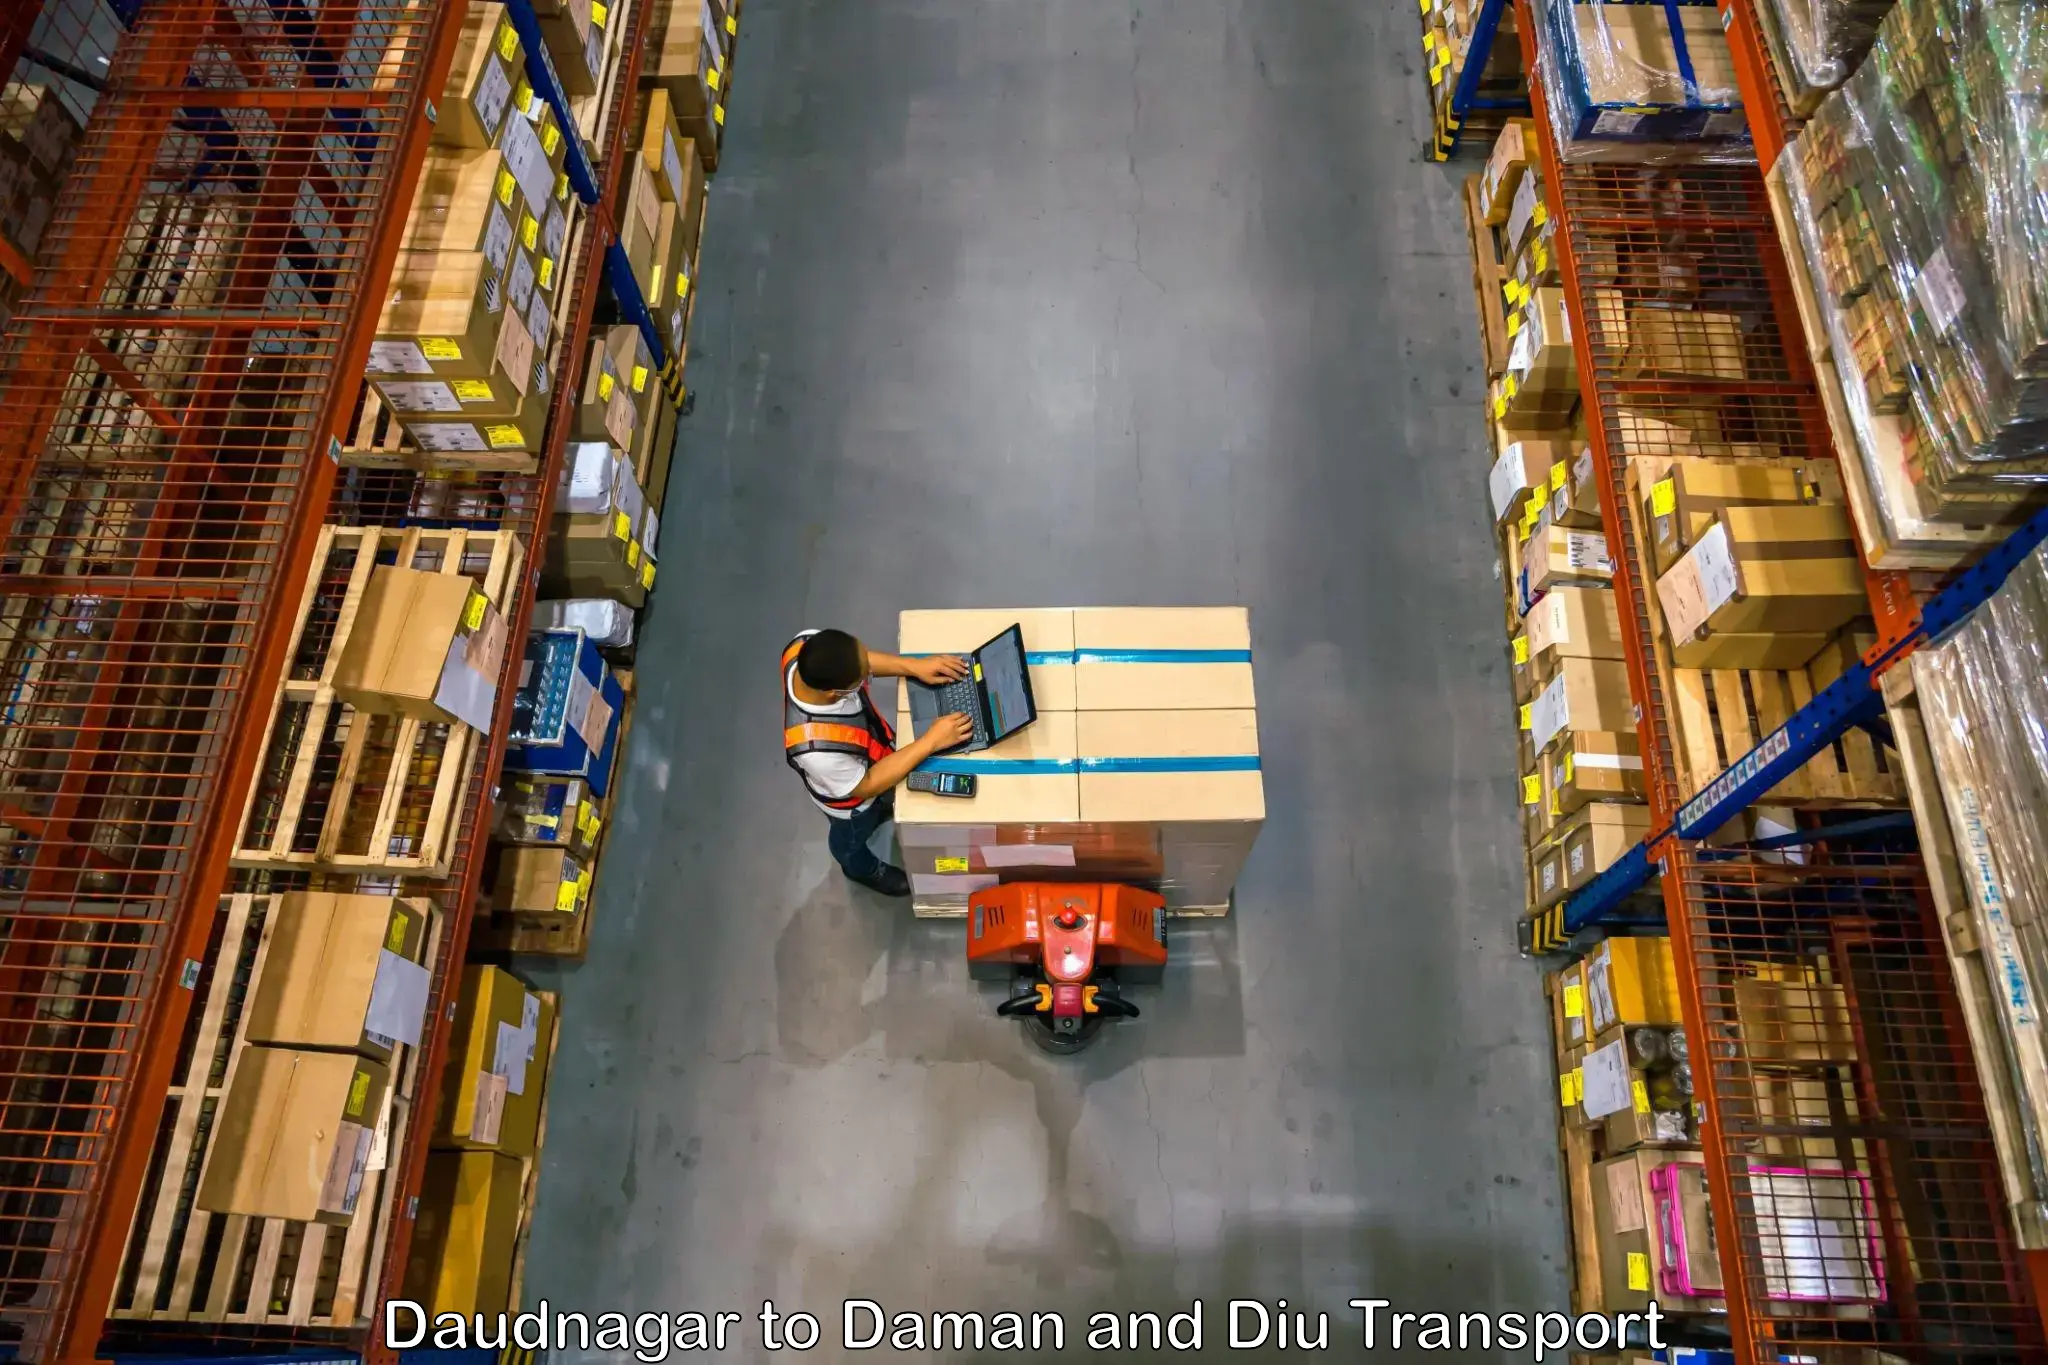 Truck transport companies in India Daudnagar to Daman and Diu